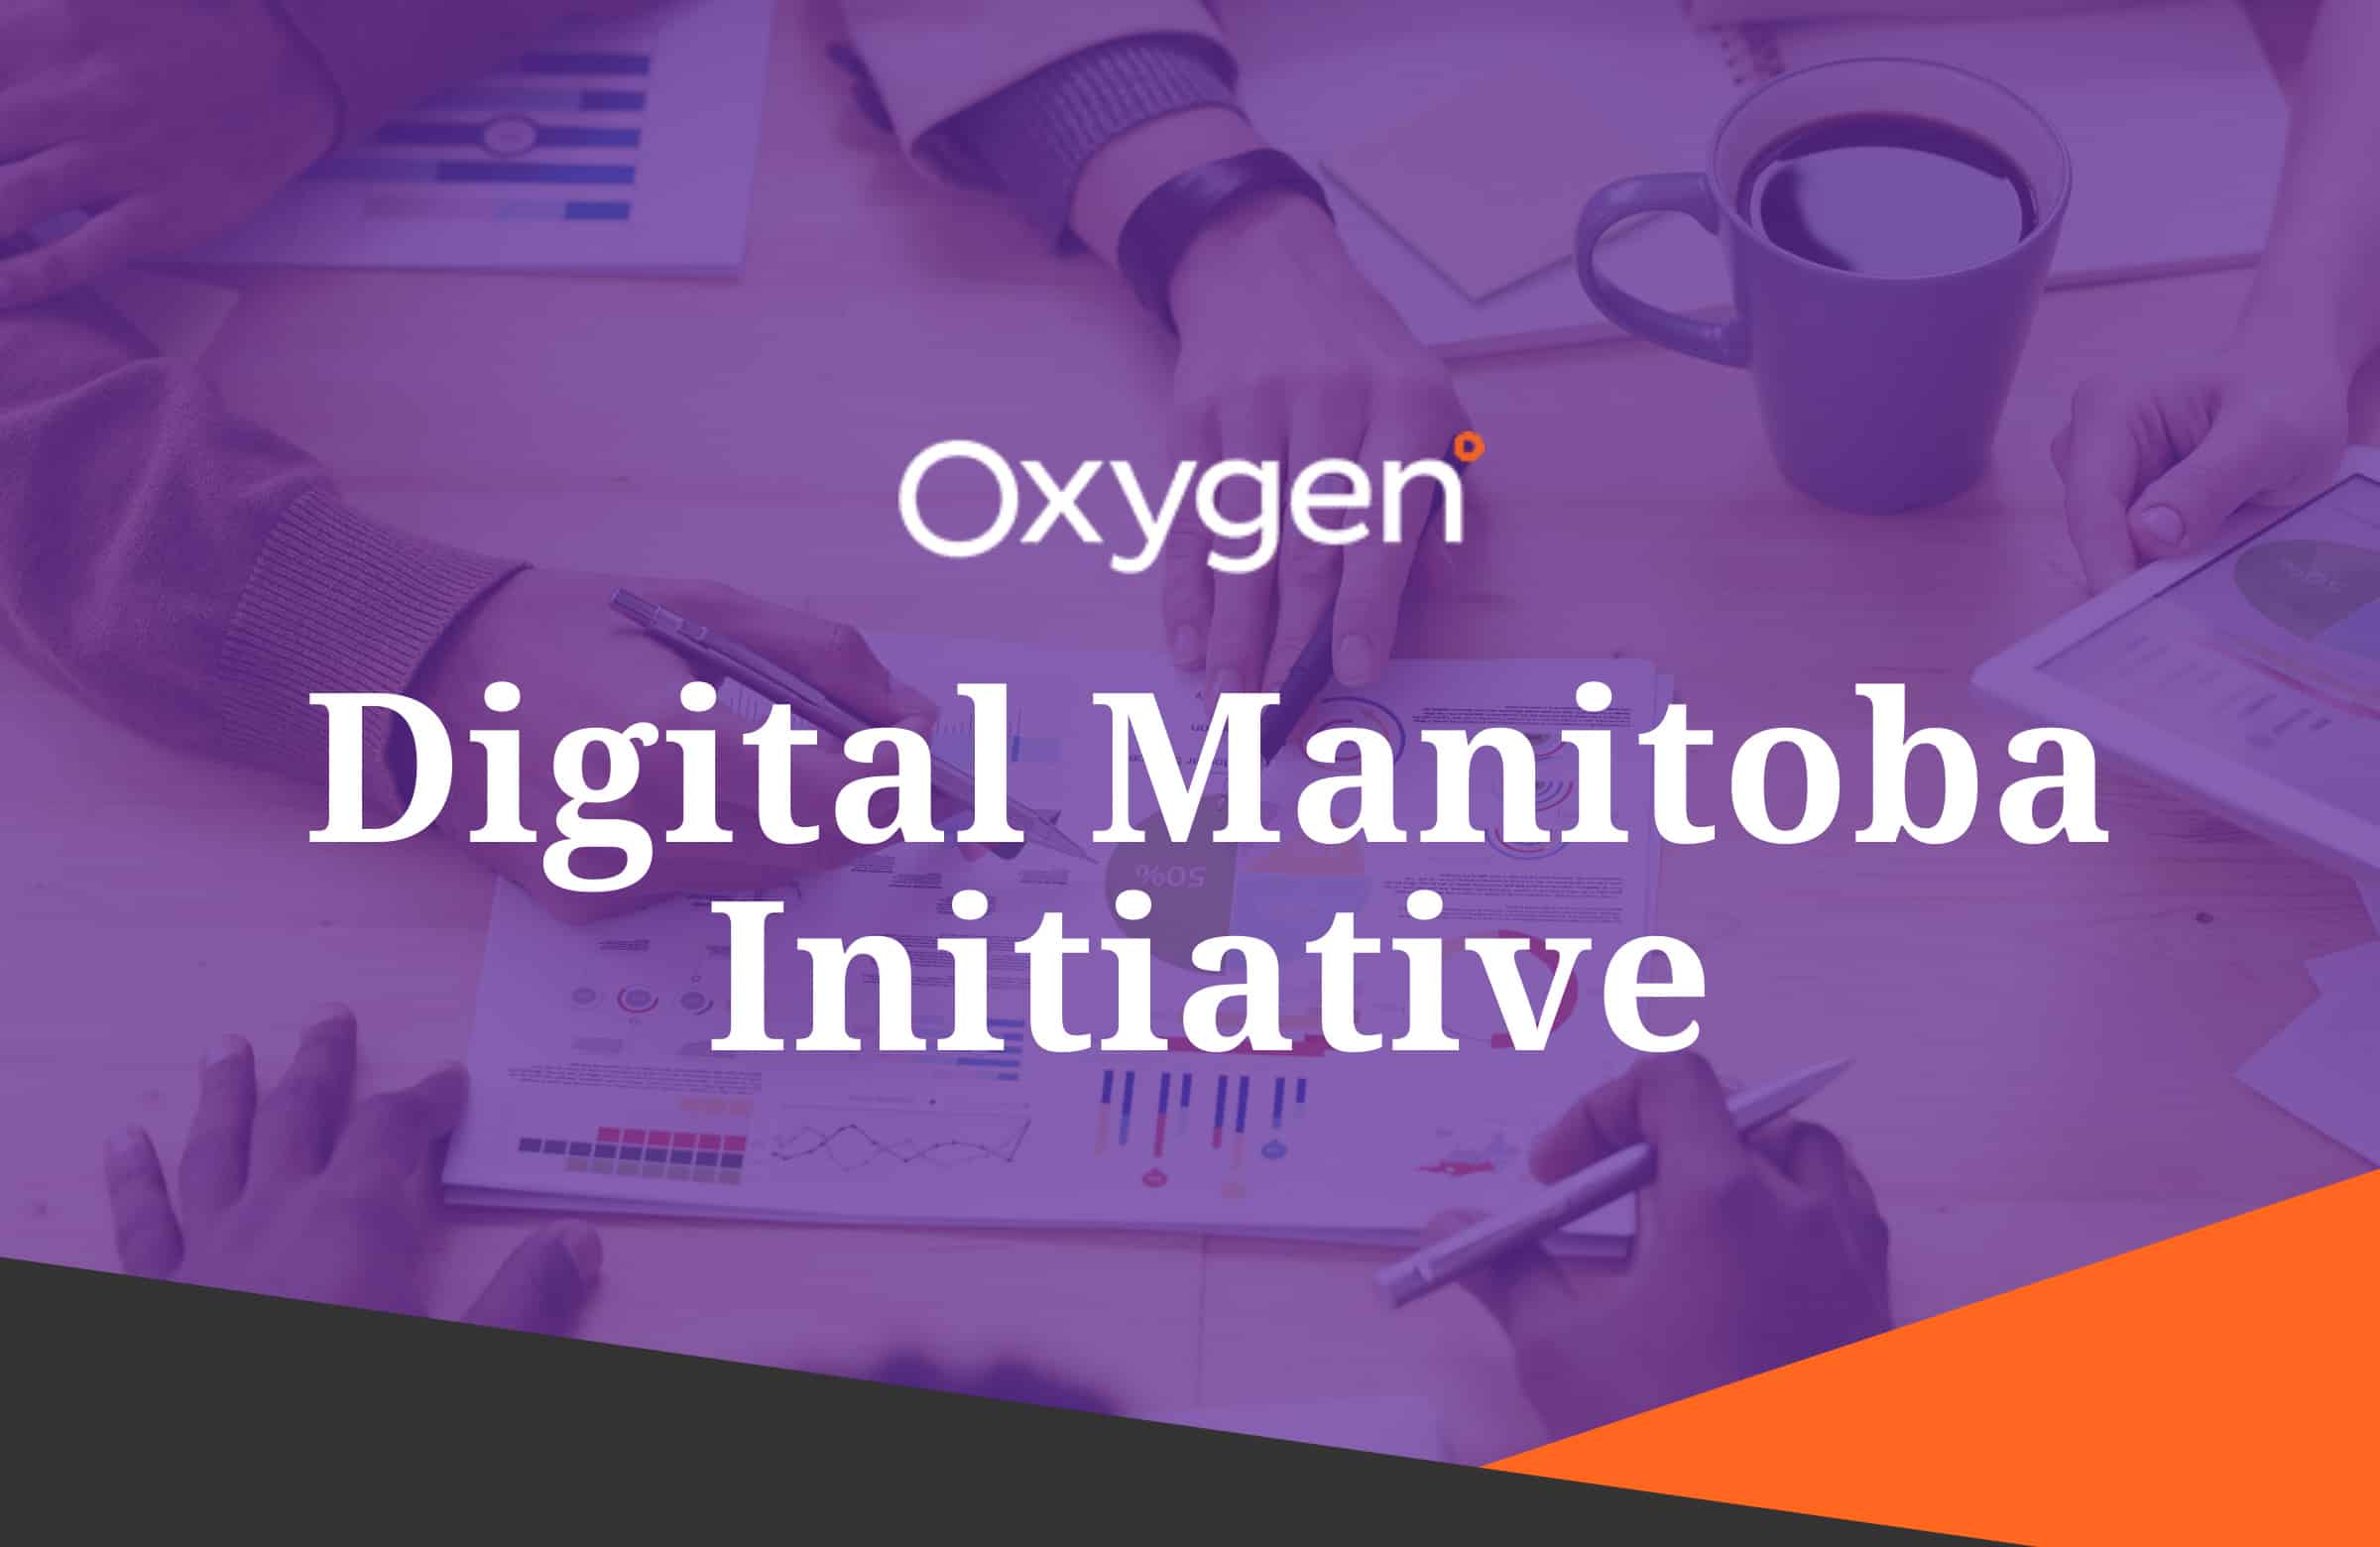 Digital Manitoba Initiative